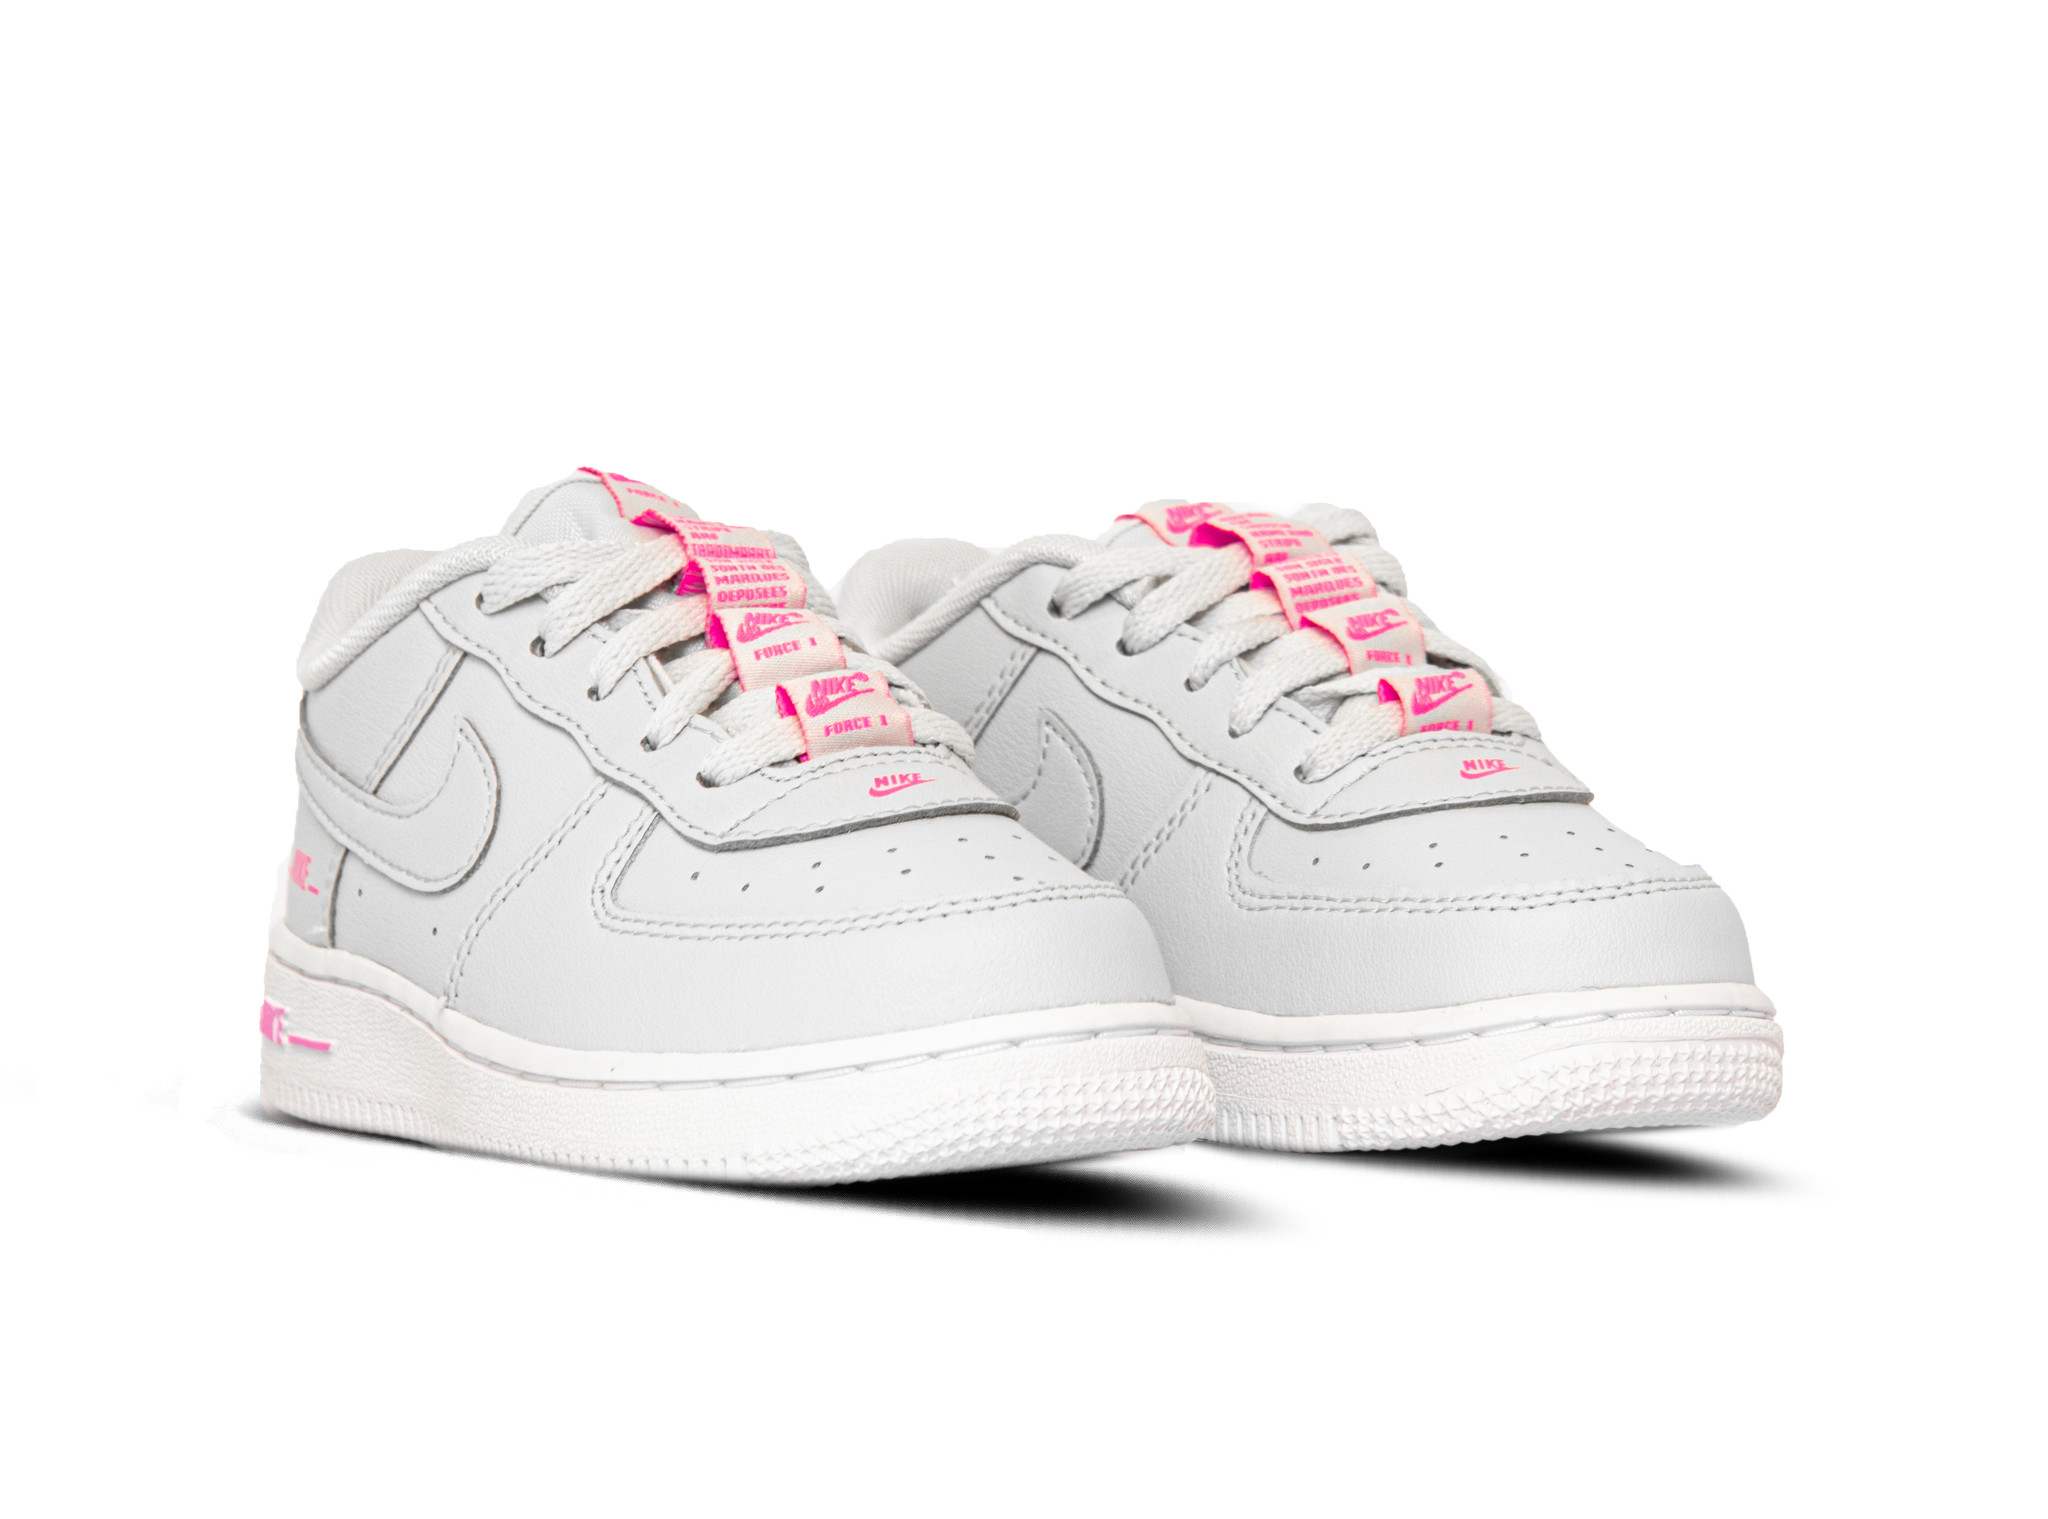 Force 1 LV8 3 PS Photon Dust Digital Pink CJ4113 002 - Bruut Sneakers \u0026  Clothing Store